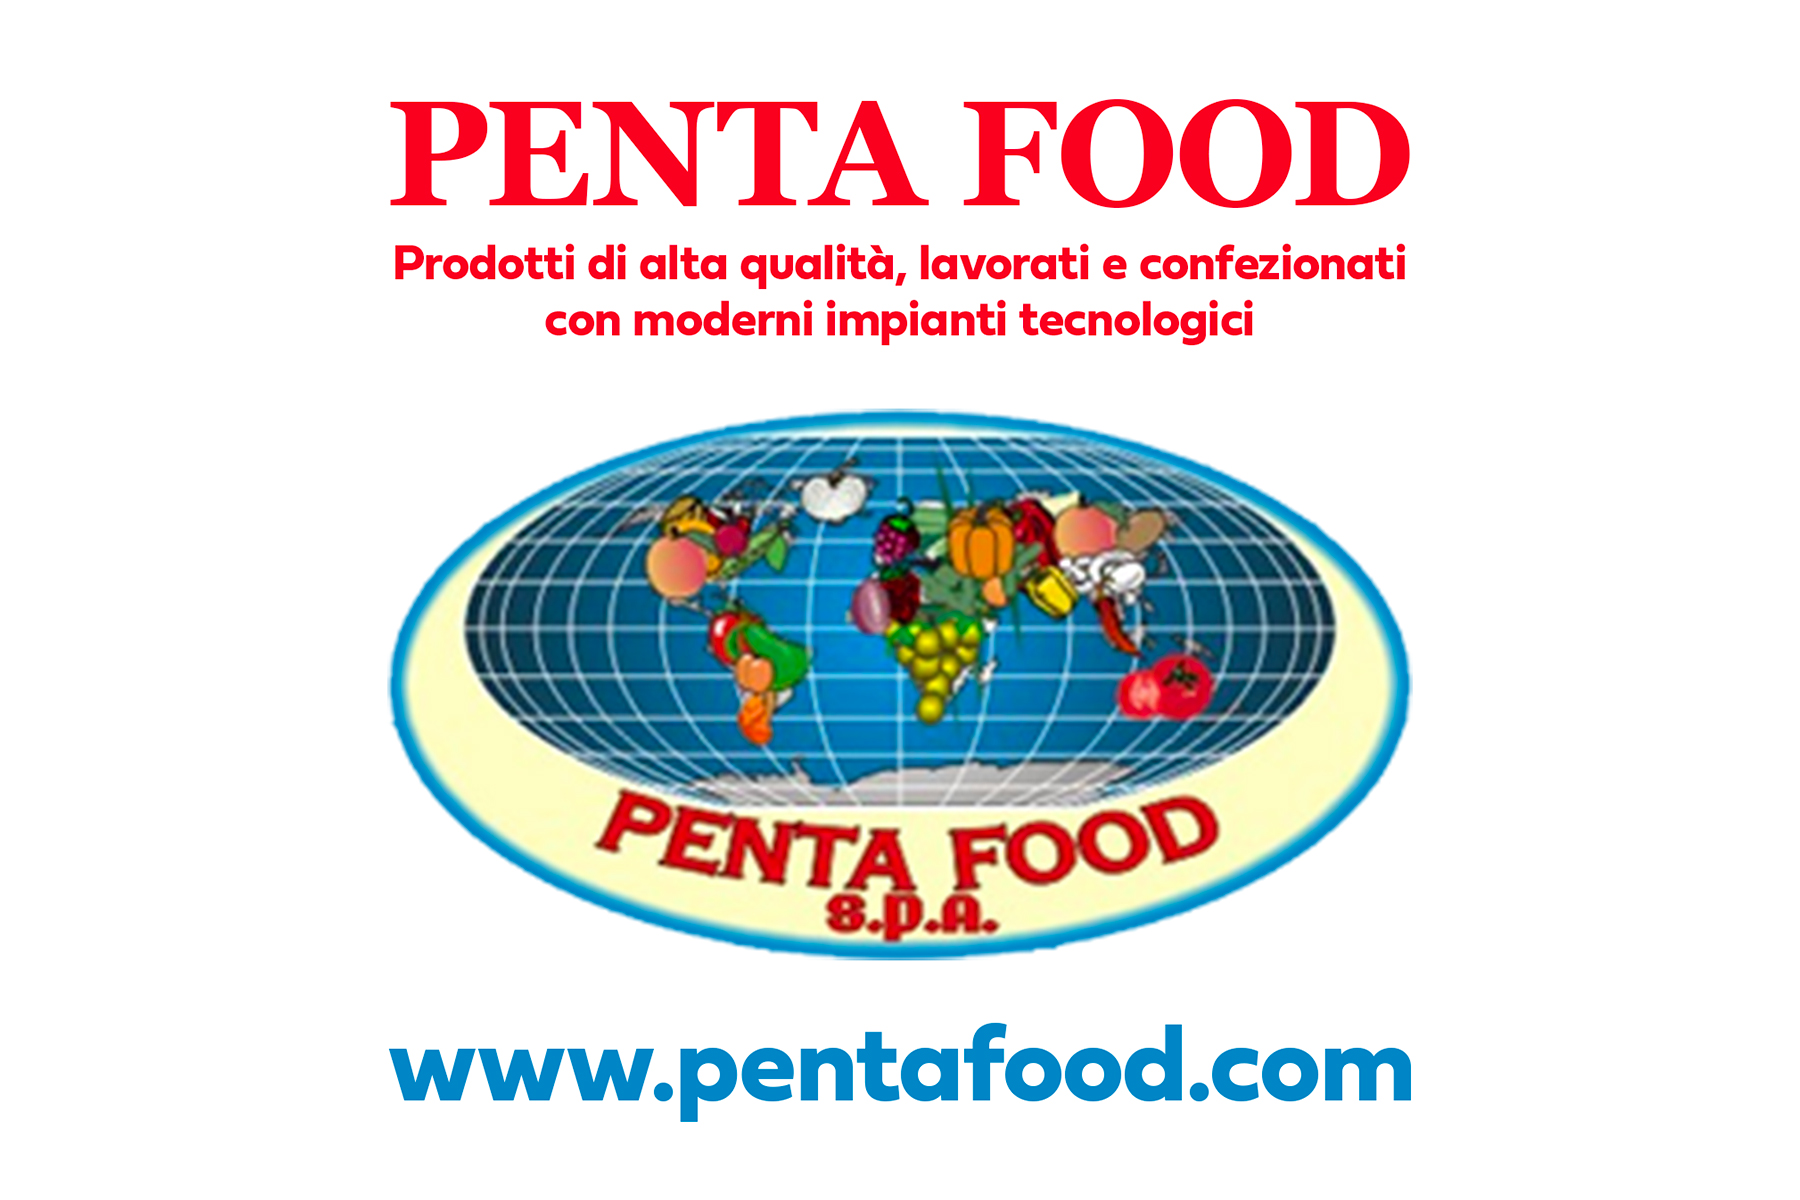 Penta Food